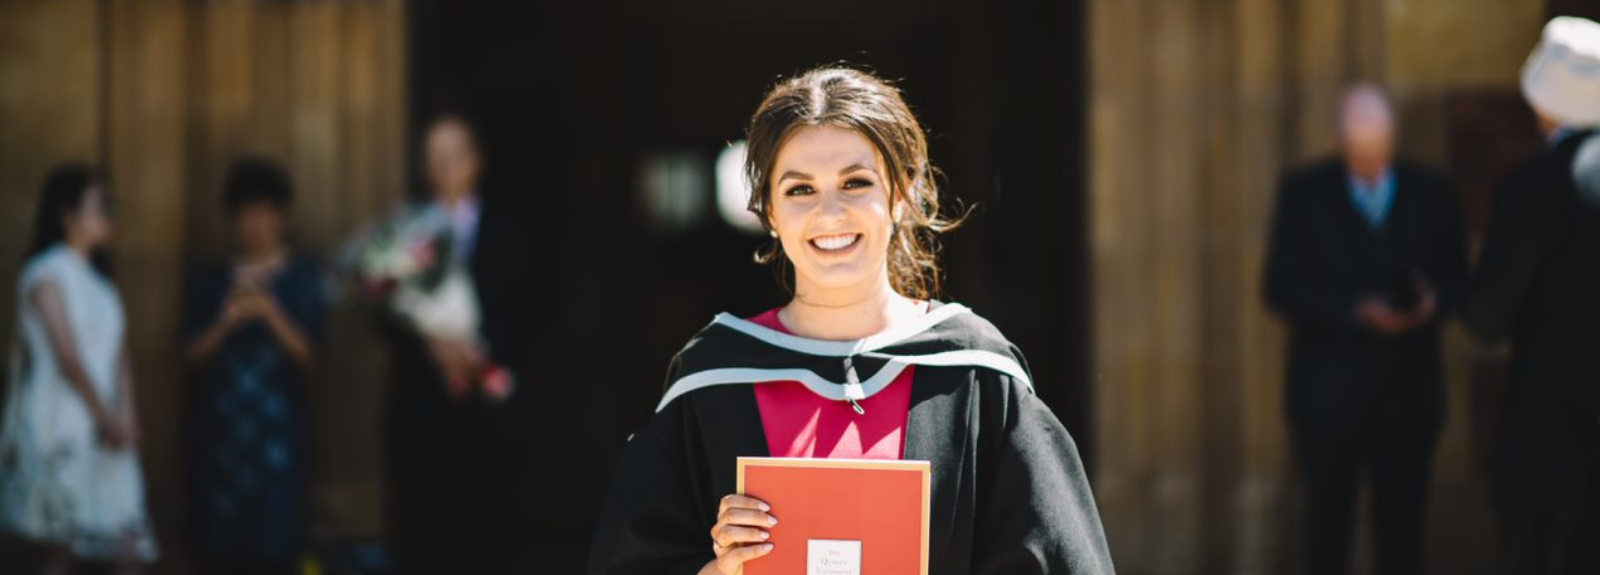 female graduate holding University degree in graduation gown